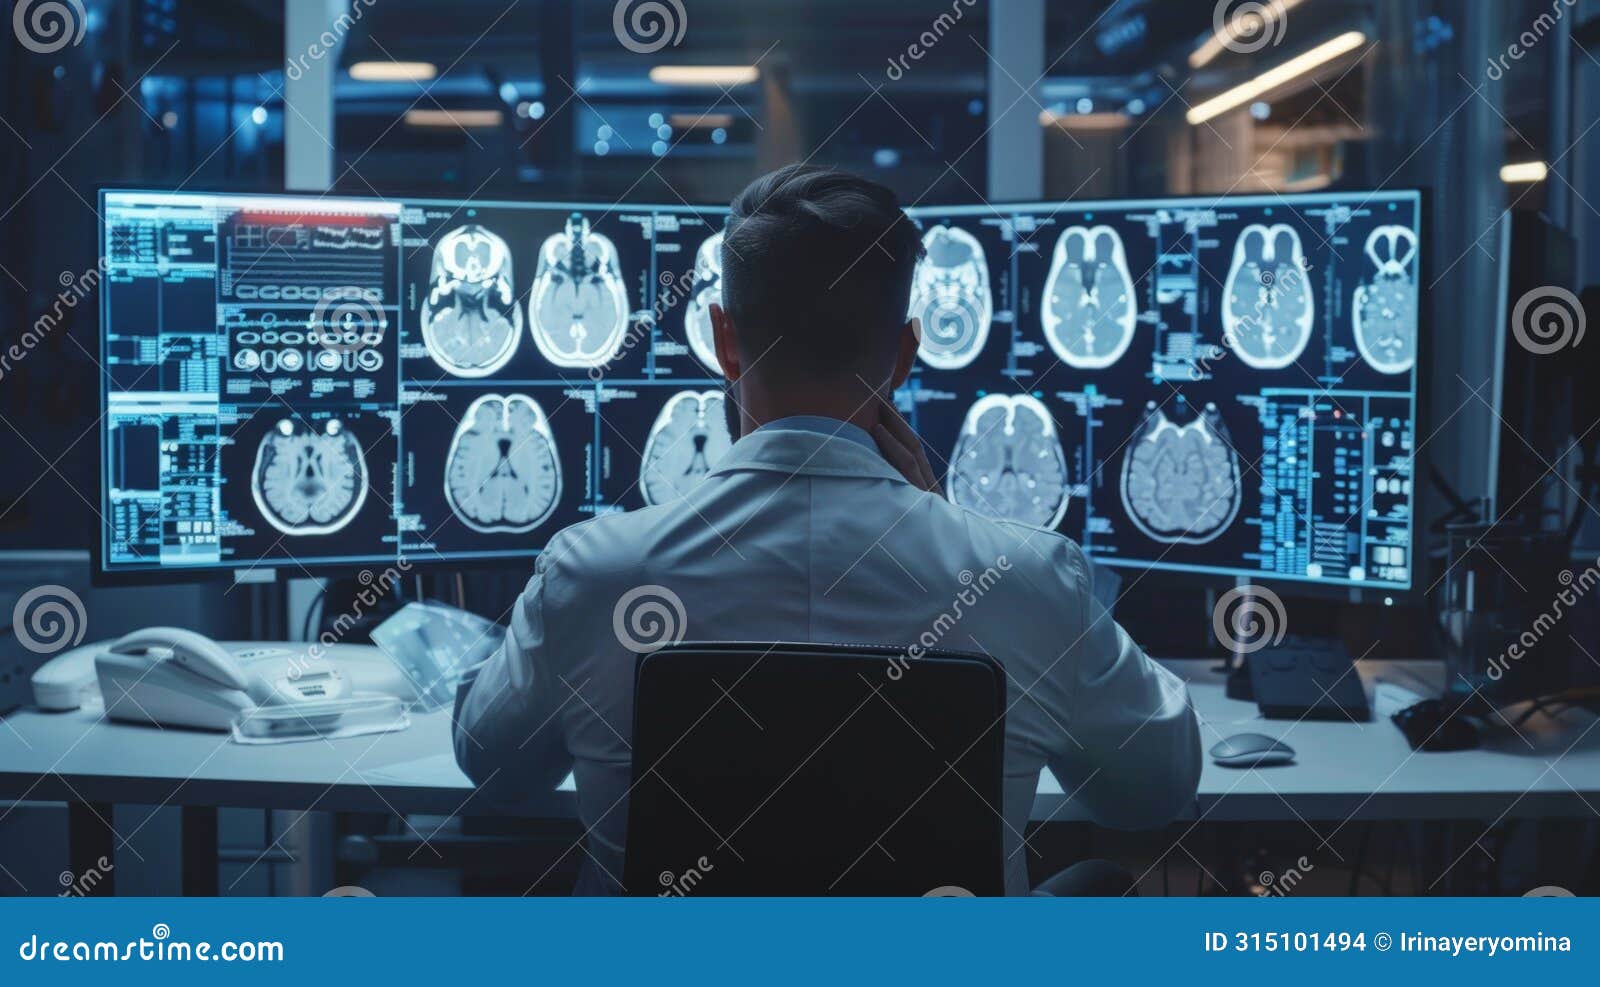 ai algorithms enhancing medical diagnosis with ct scans